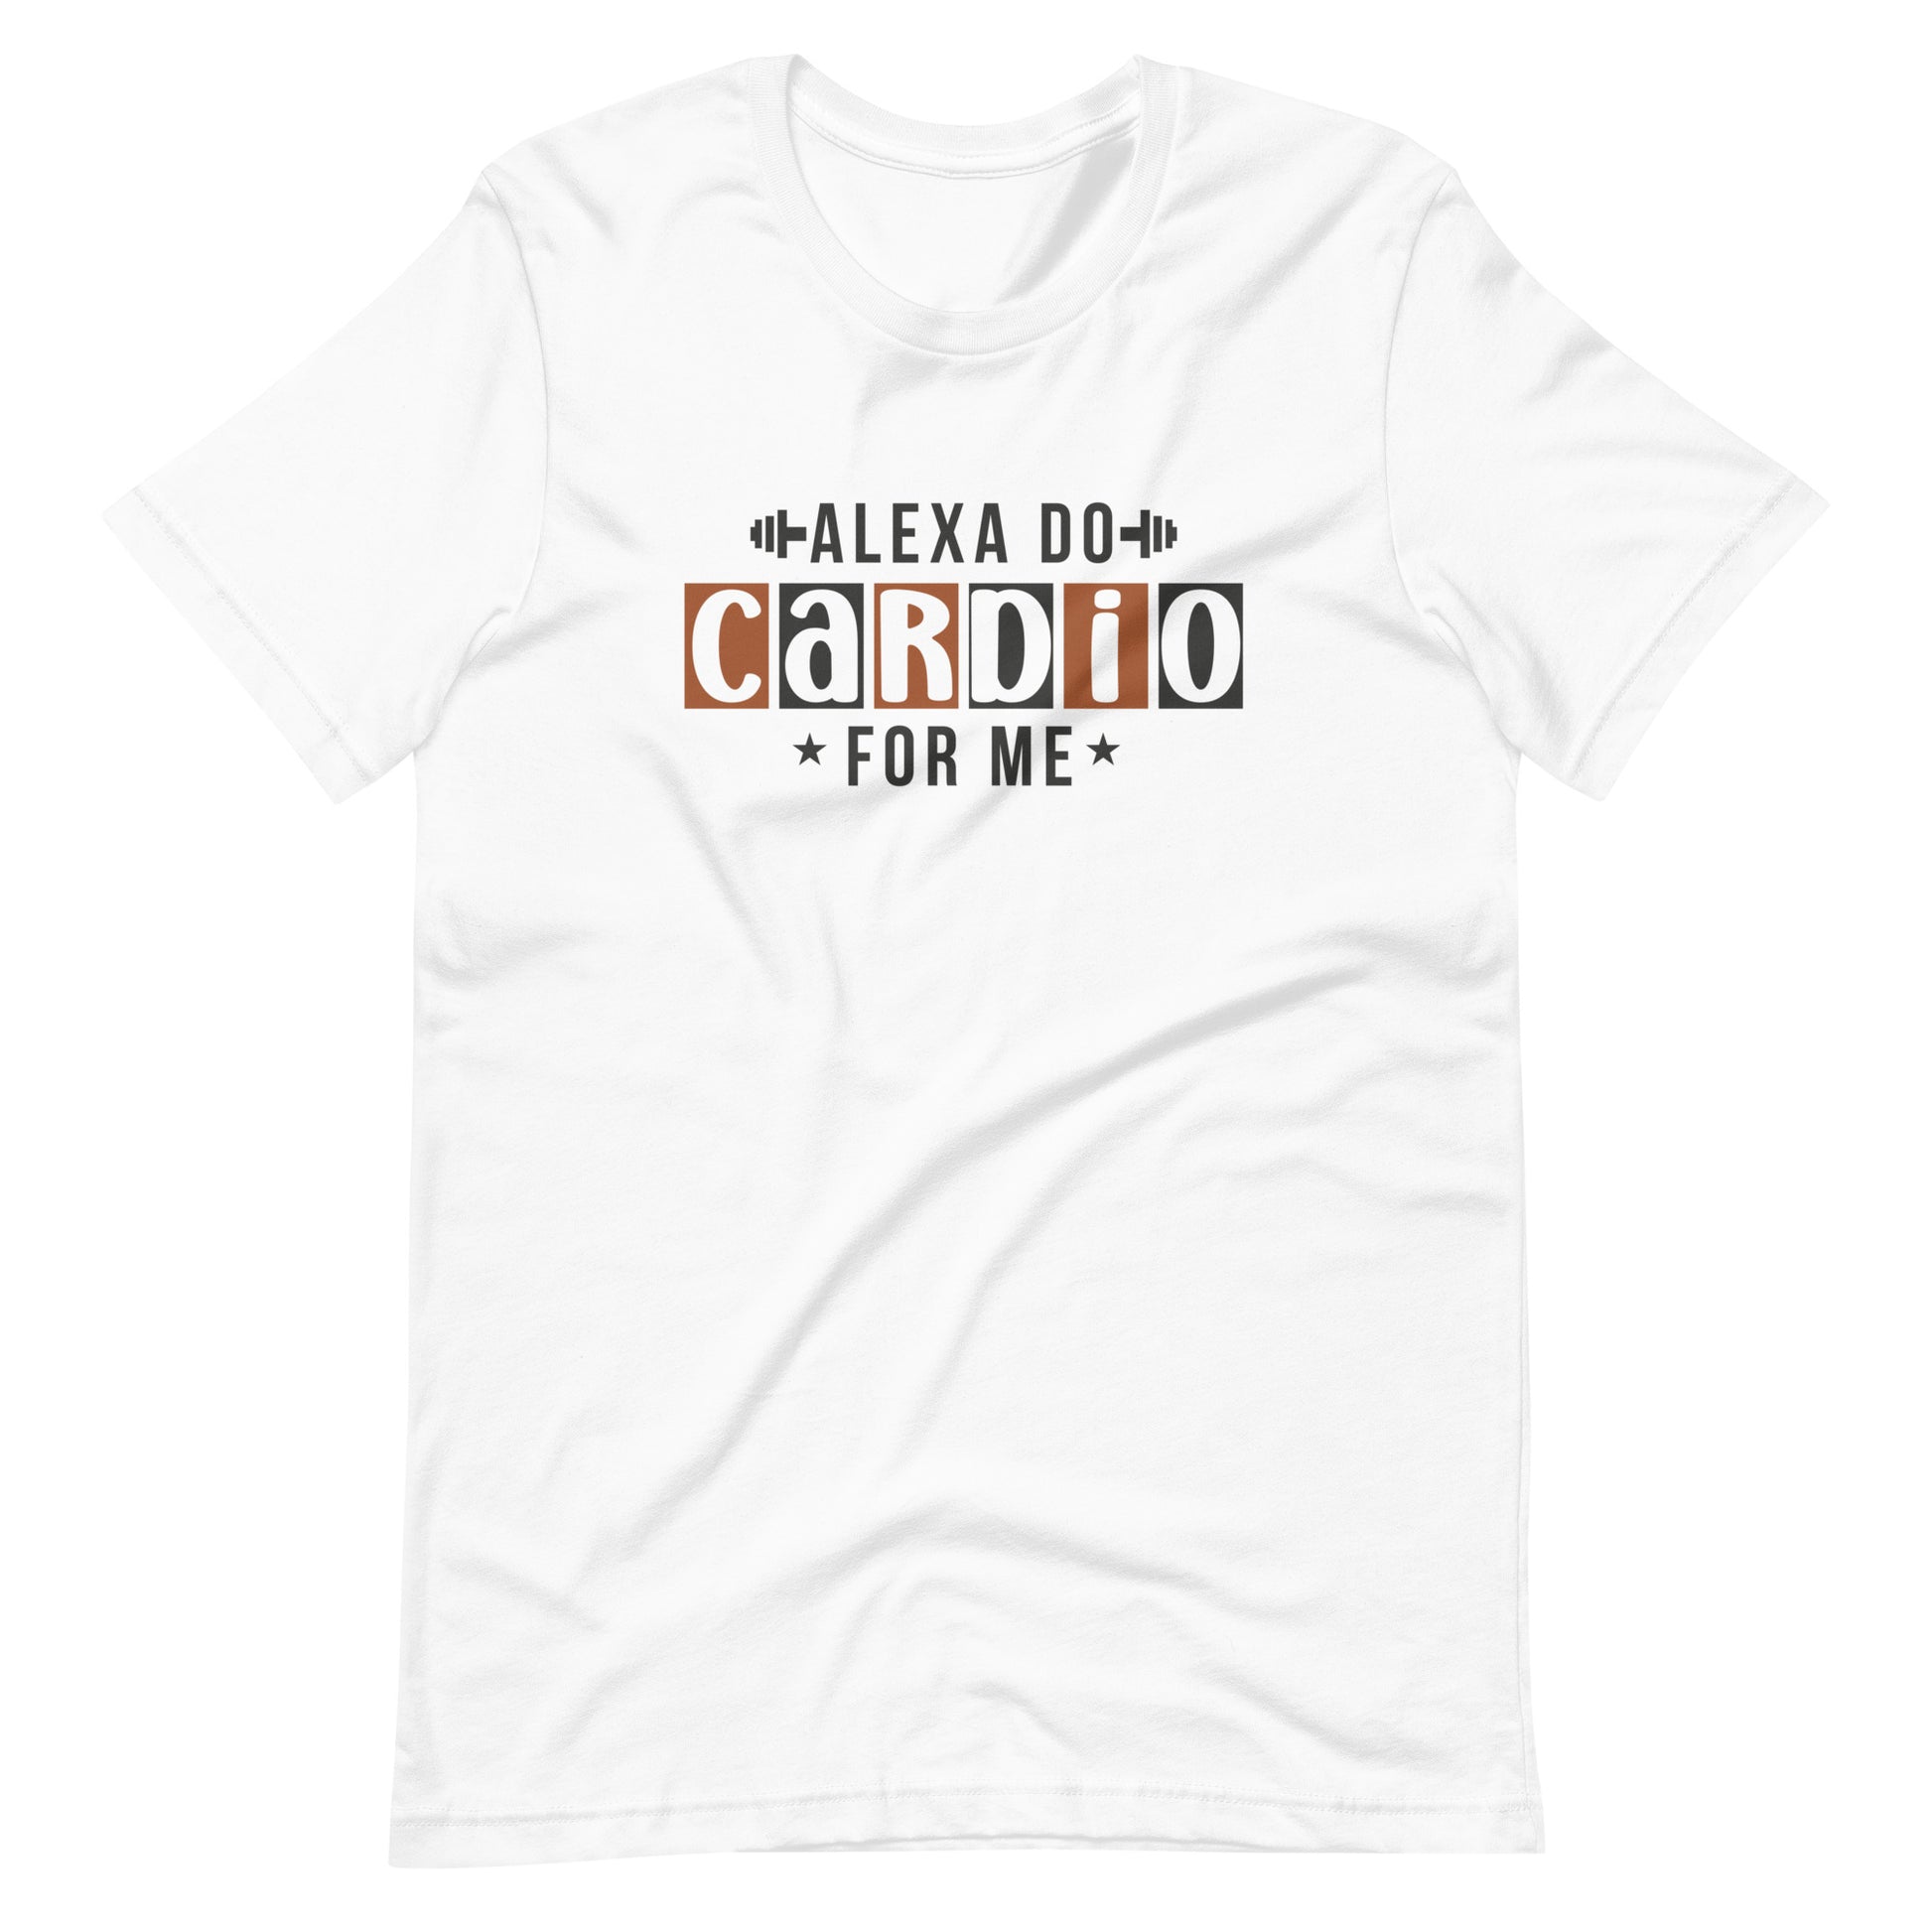 Alexa do cardio for me unisex t-shirt The Workout Inspiration